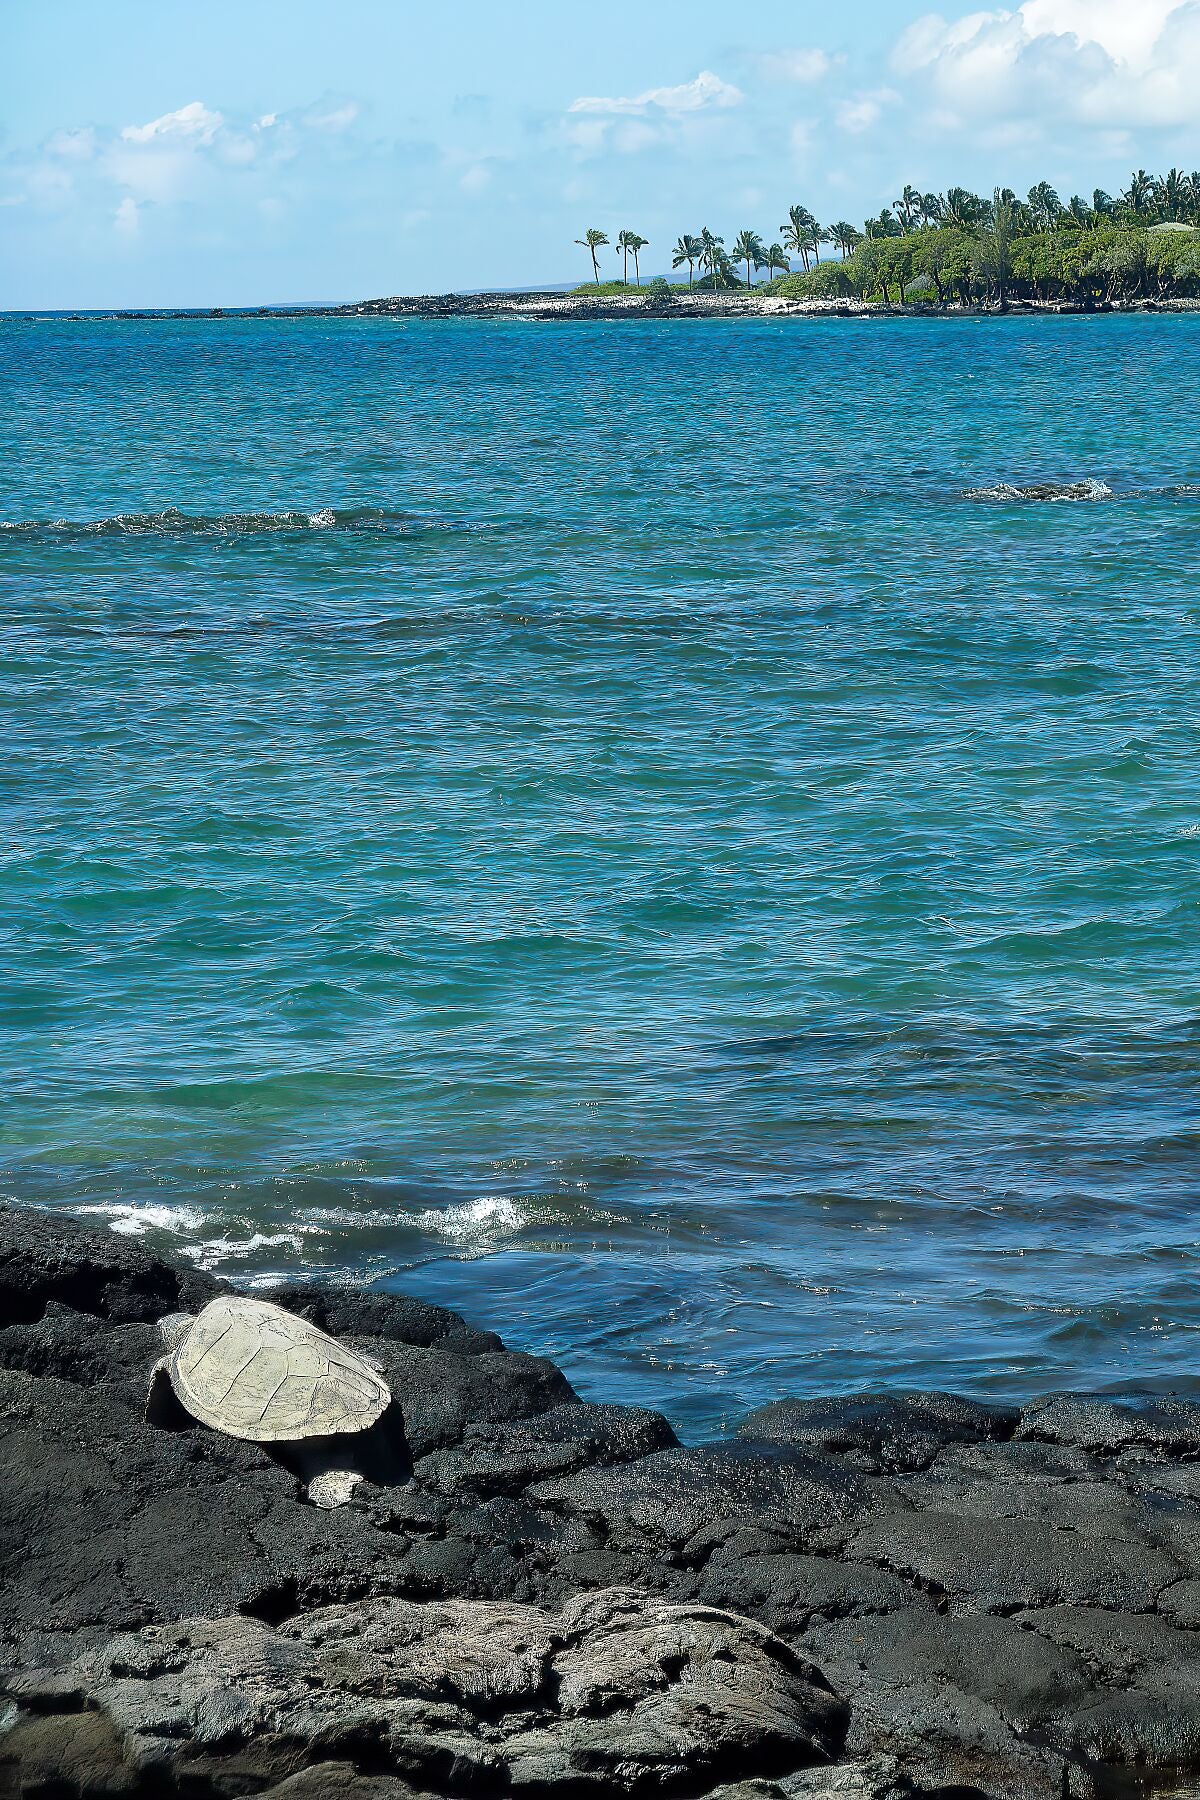 Turtle resting on volcanic rocks